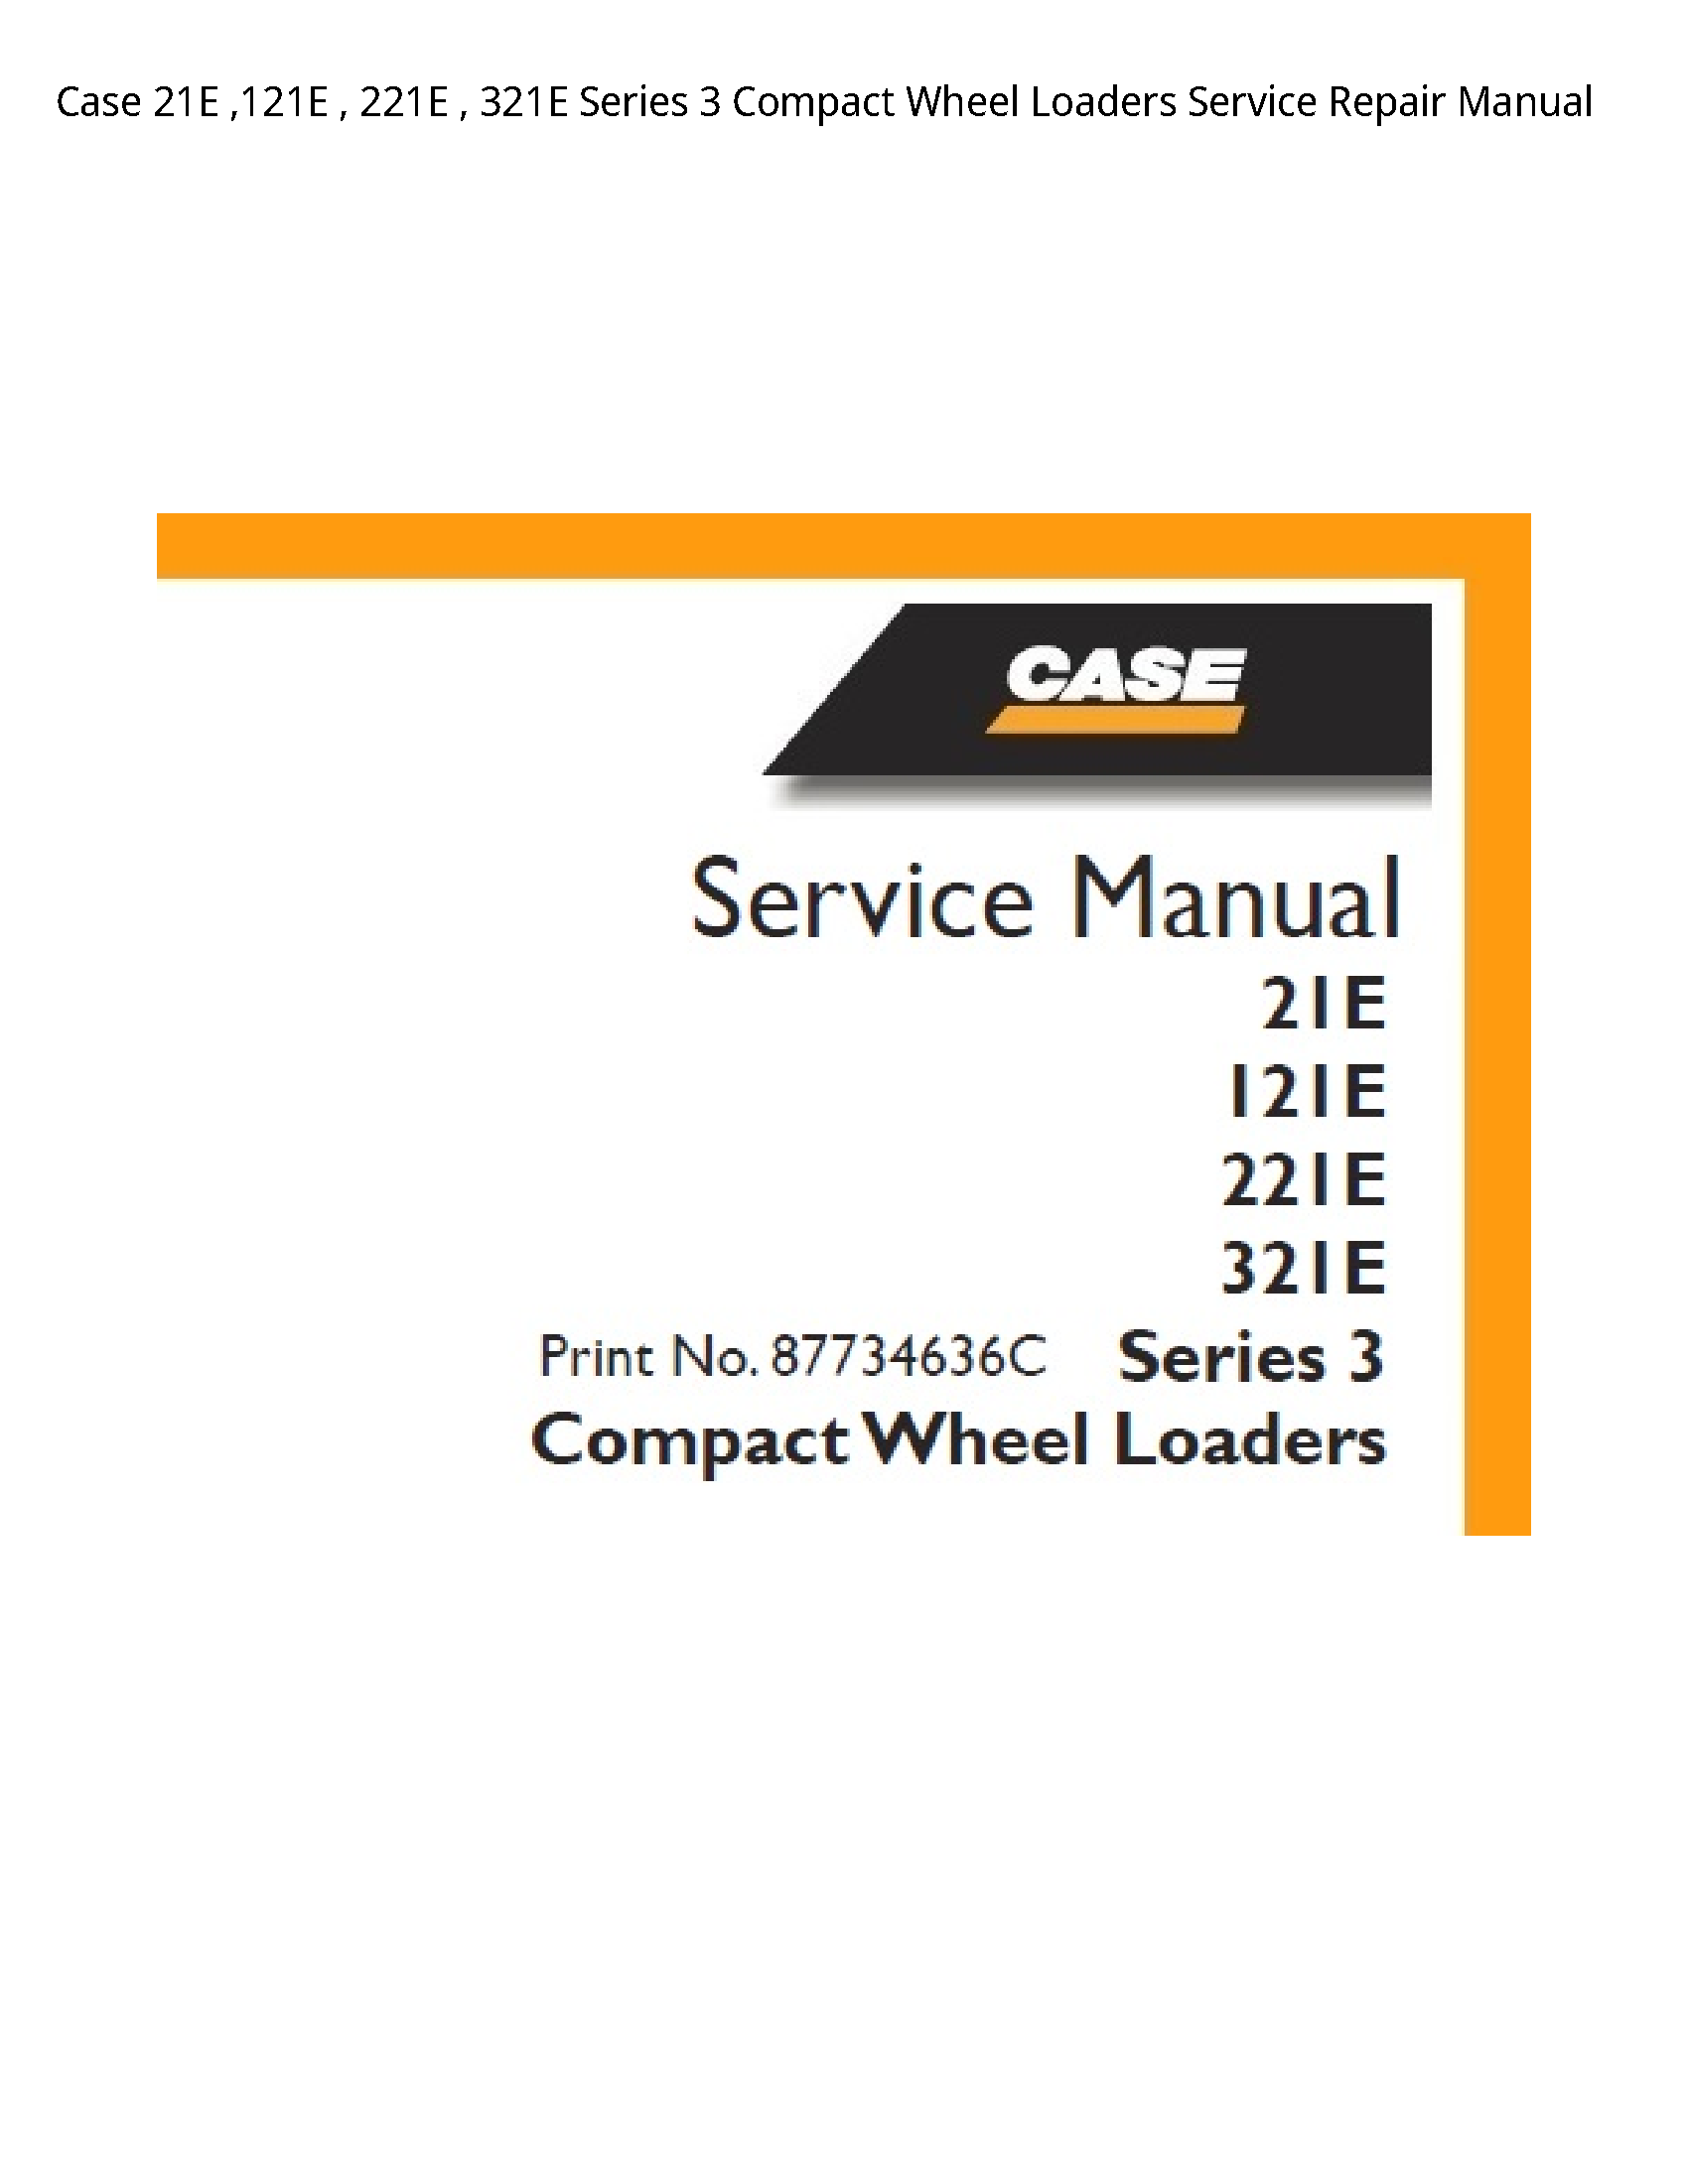 Case/Case IH 21E Series Compact Wheel Loaders manual